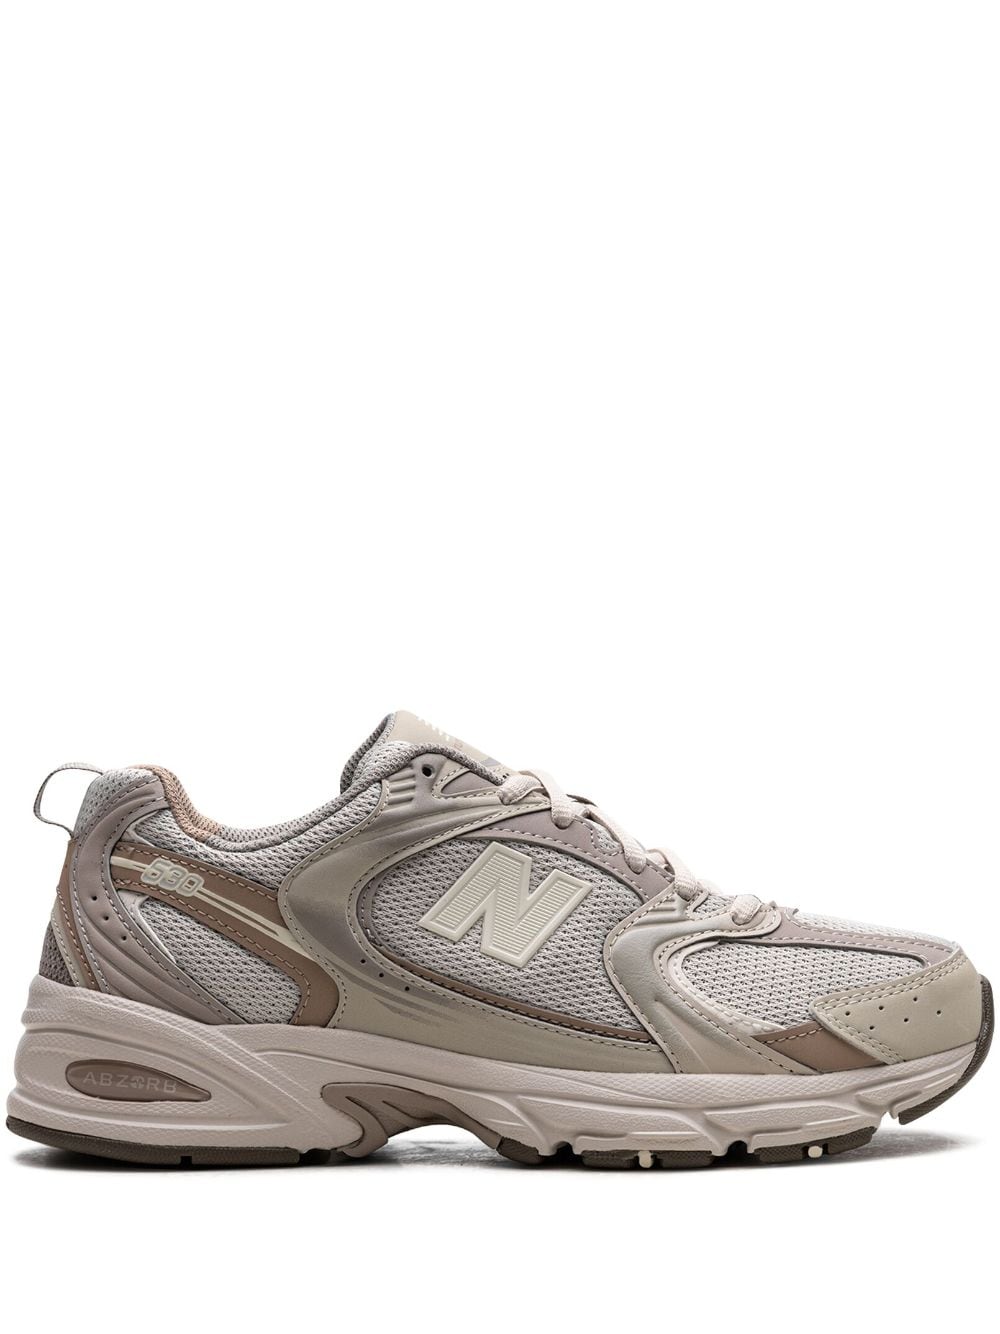 New Balance 530 "Cream/Beige" sneakers - Neutrals